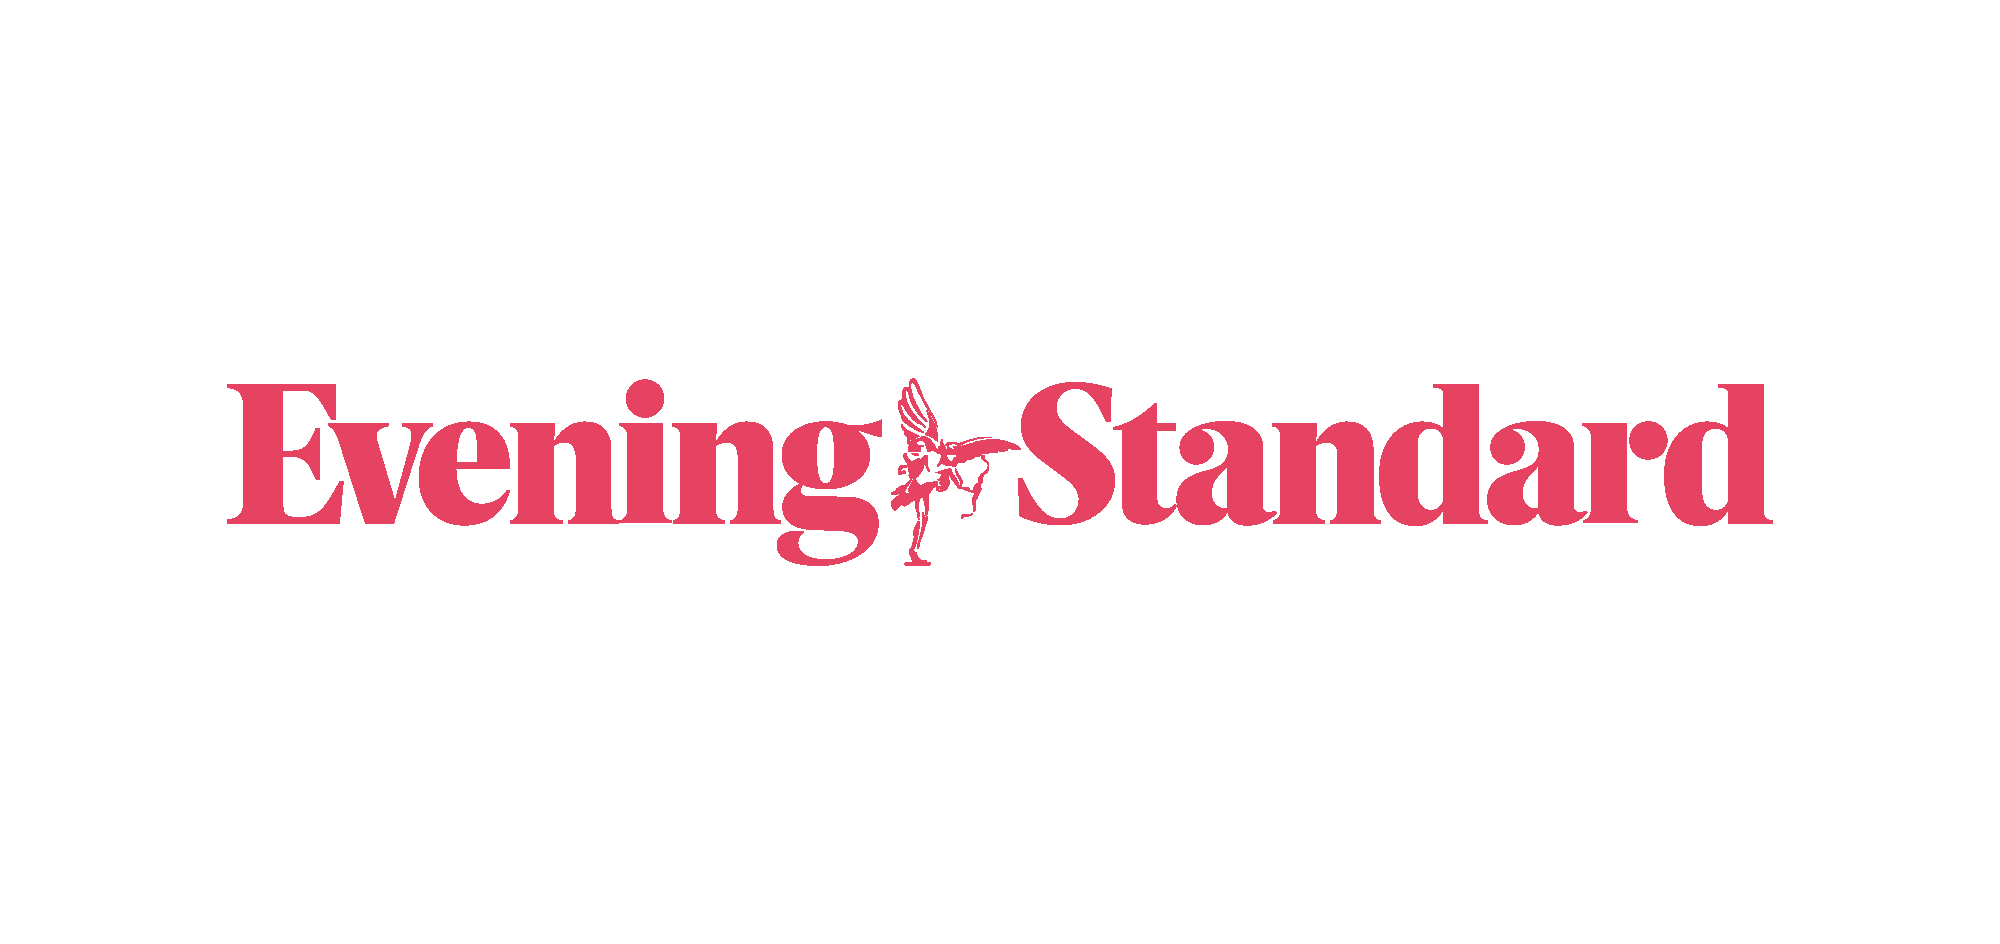 Logo_EveningStandard_Red@2x.png